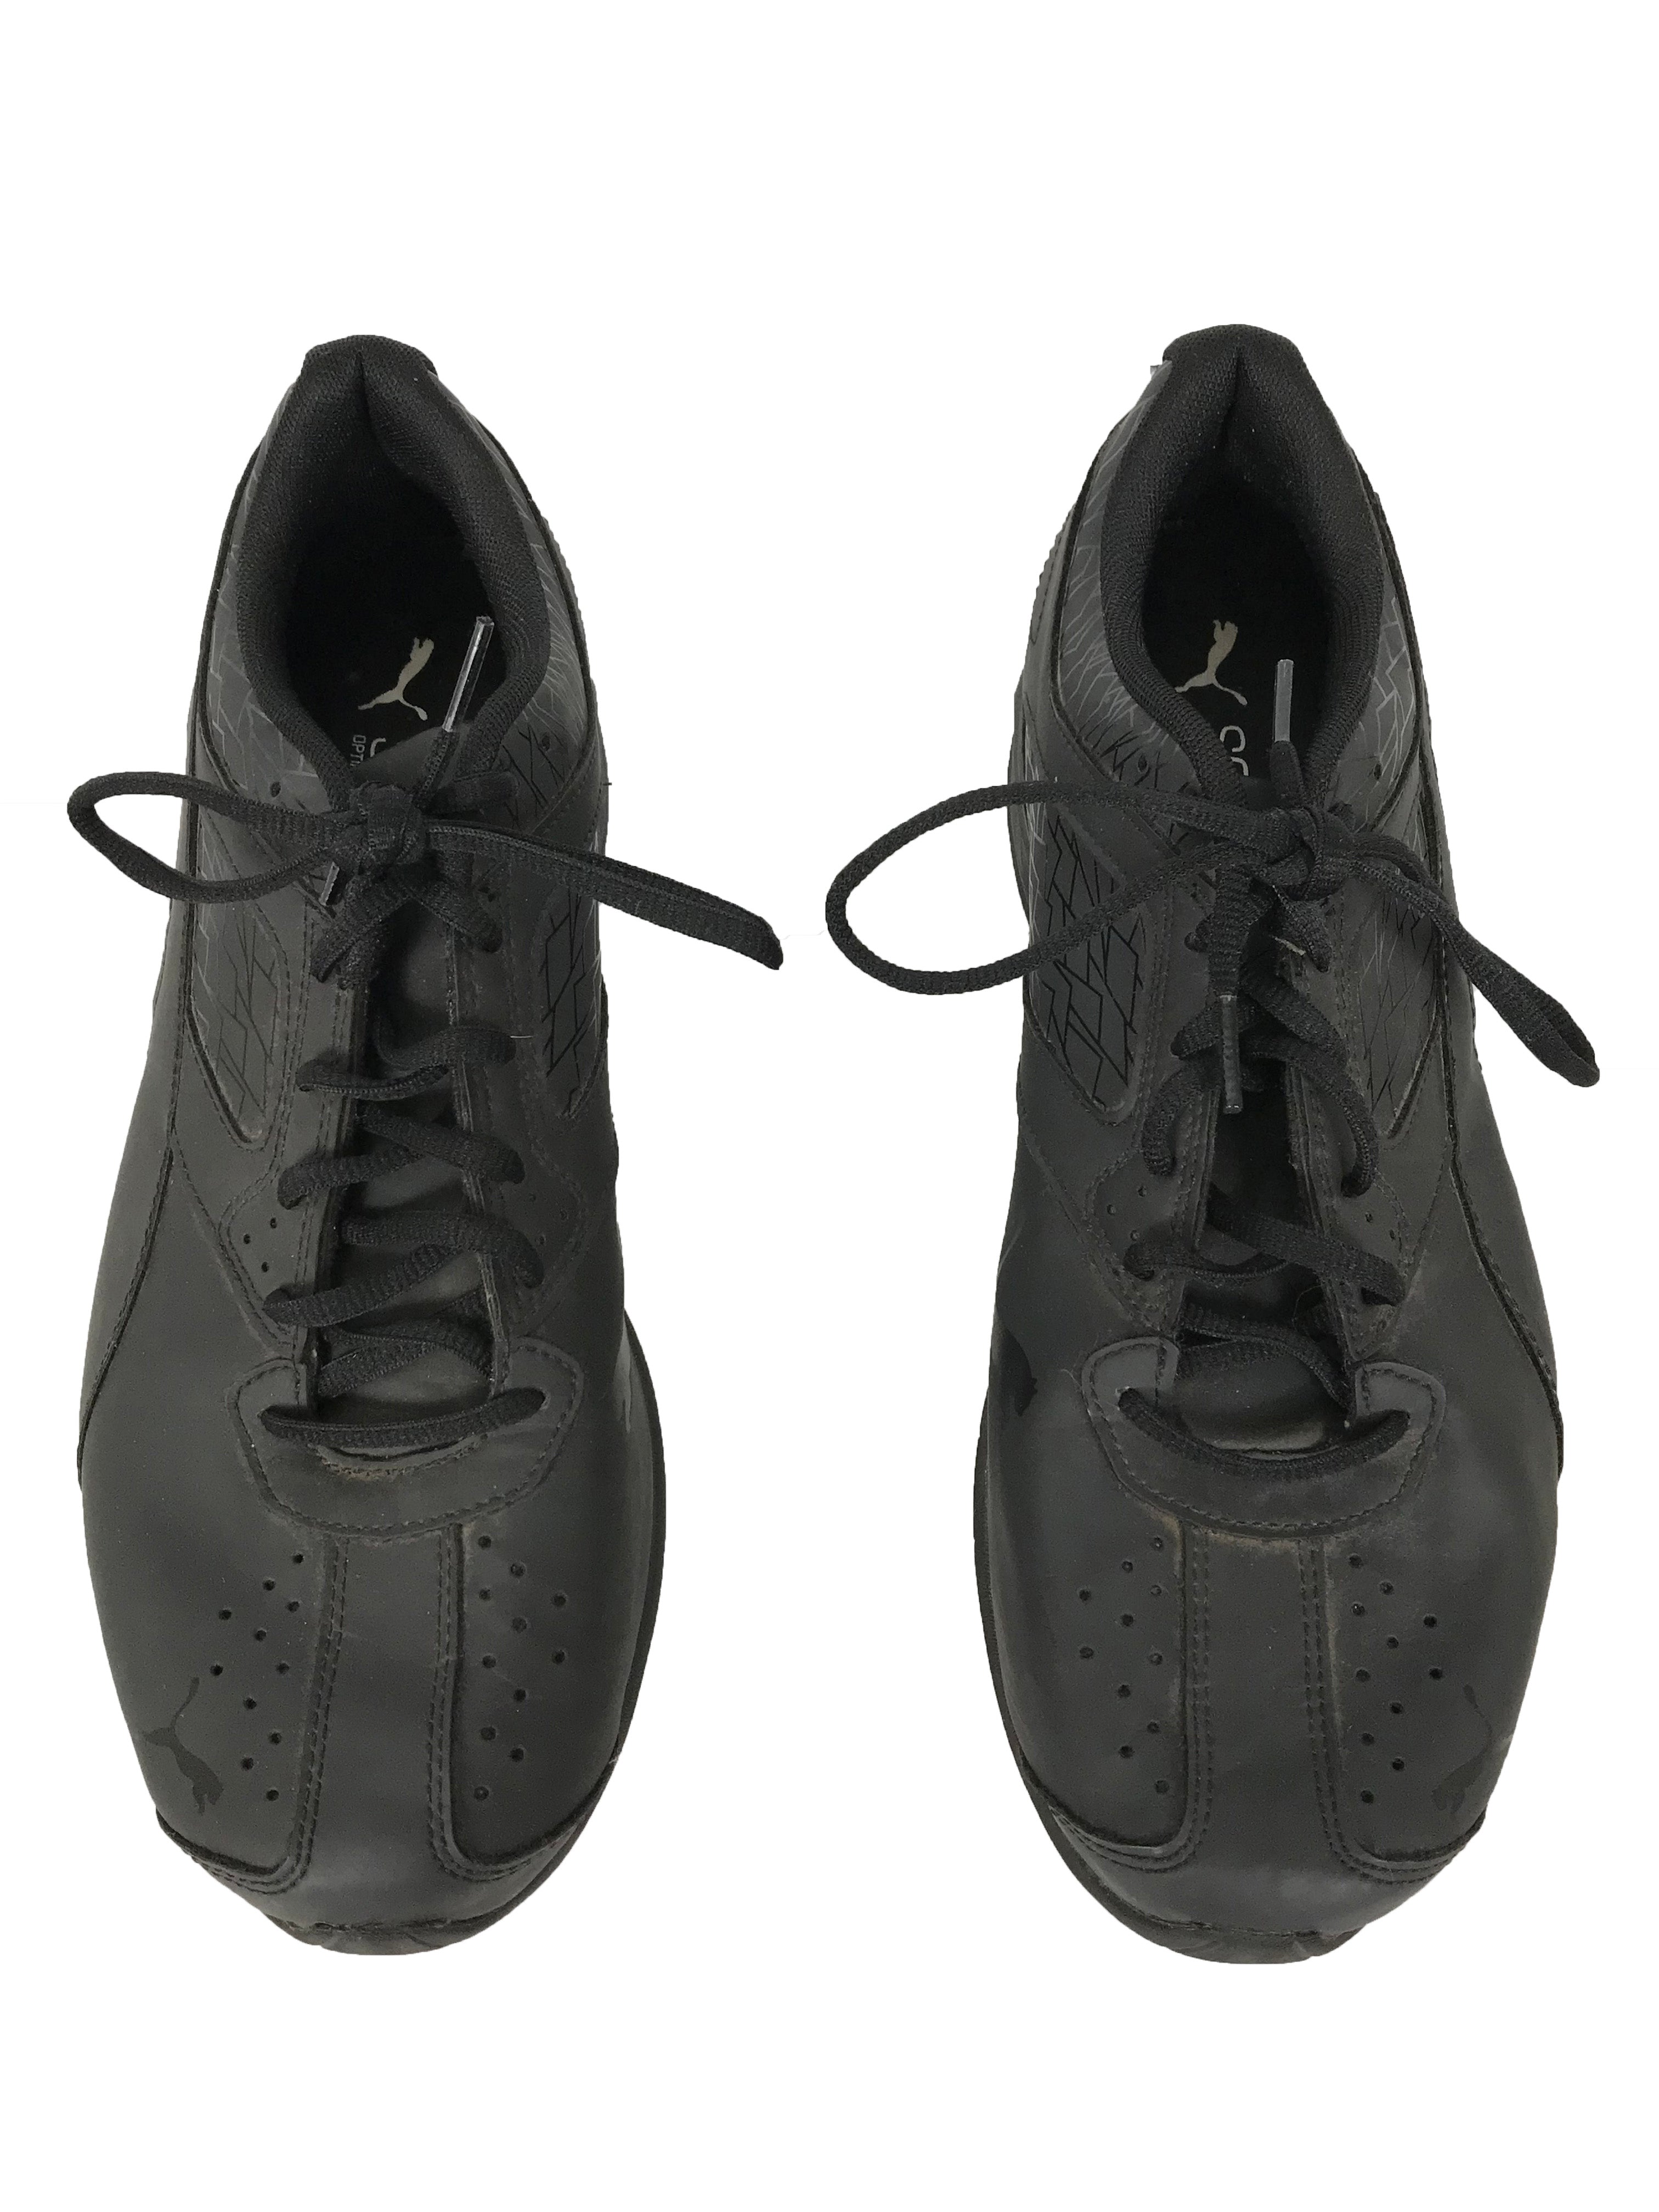 Puma Black Tazon 6 Fracture Sneakers Men's Size 10.5